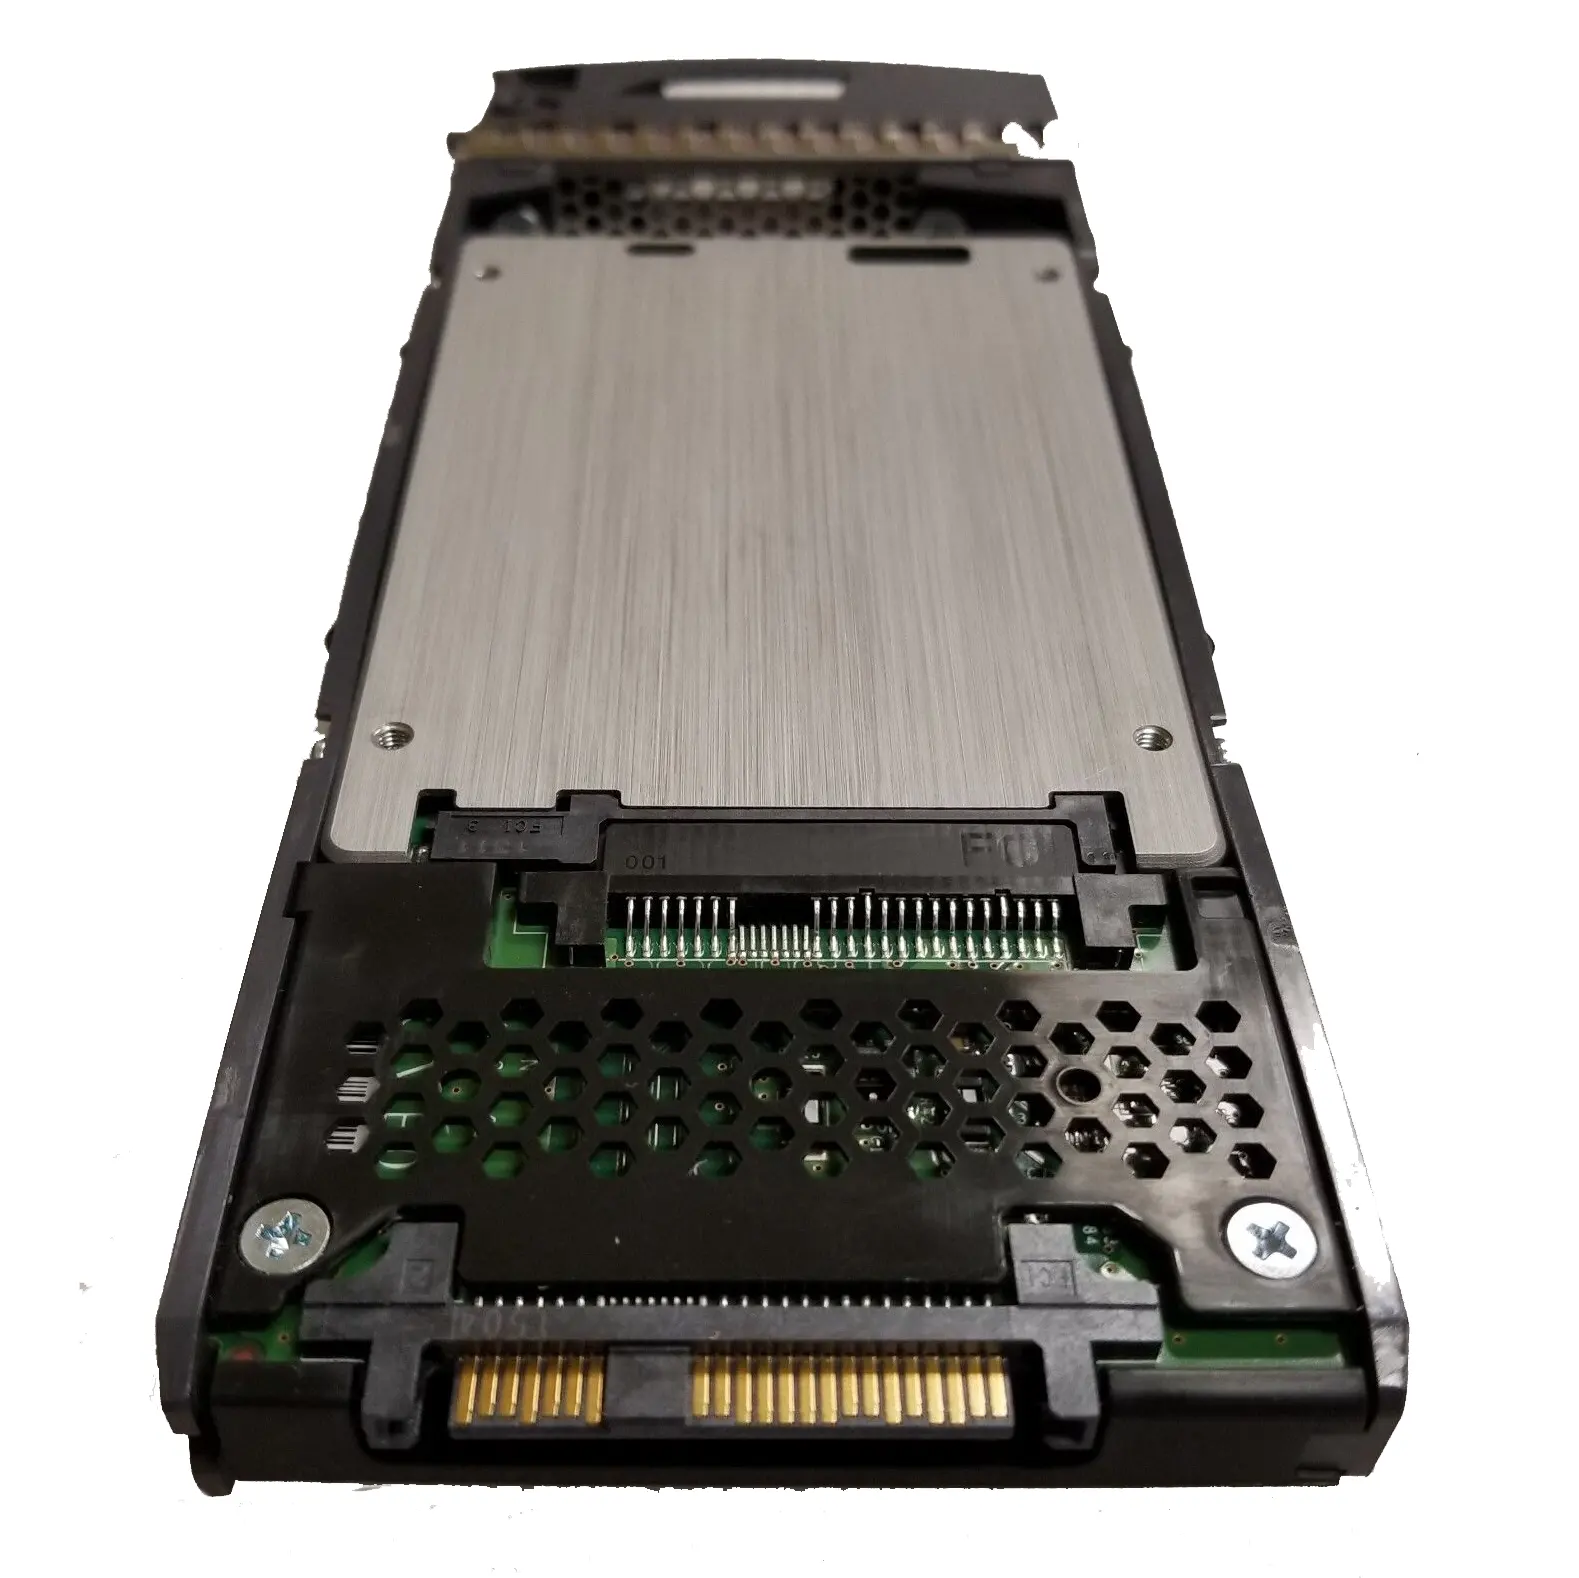 X447A-R6 NetApp 800 GB SAS 2,5 Zoll 12 GB/s SSD Festplattenlaufwerk für Server